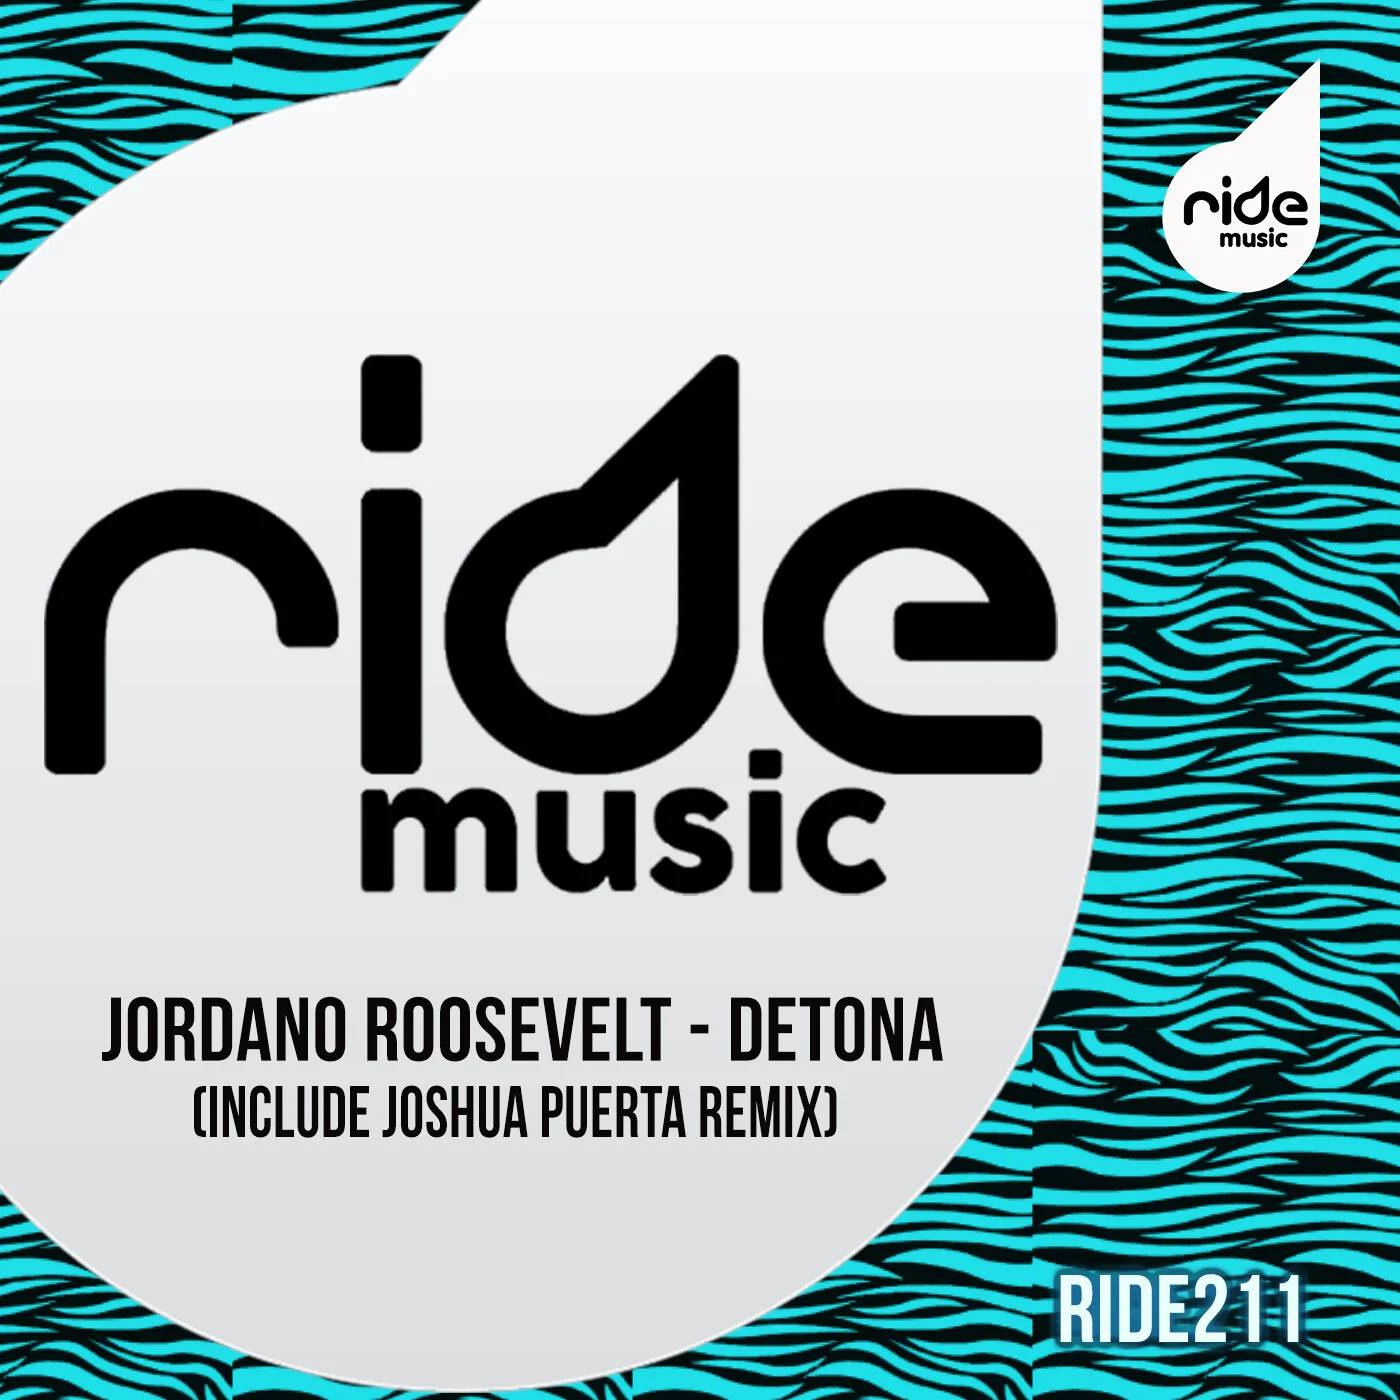 Jordano Roosevelt - Detona (Joshua Puerta Remix)